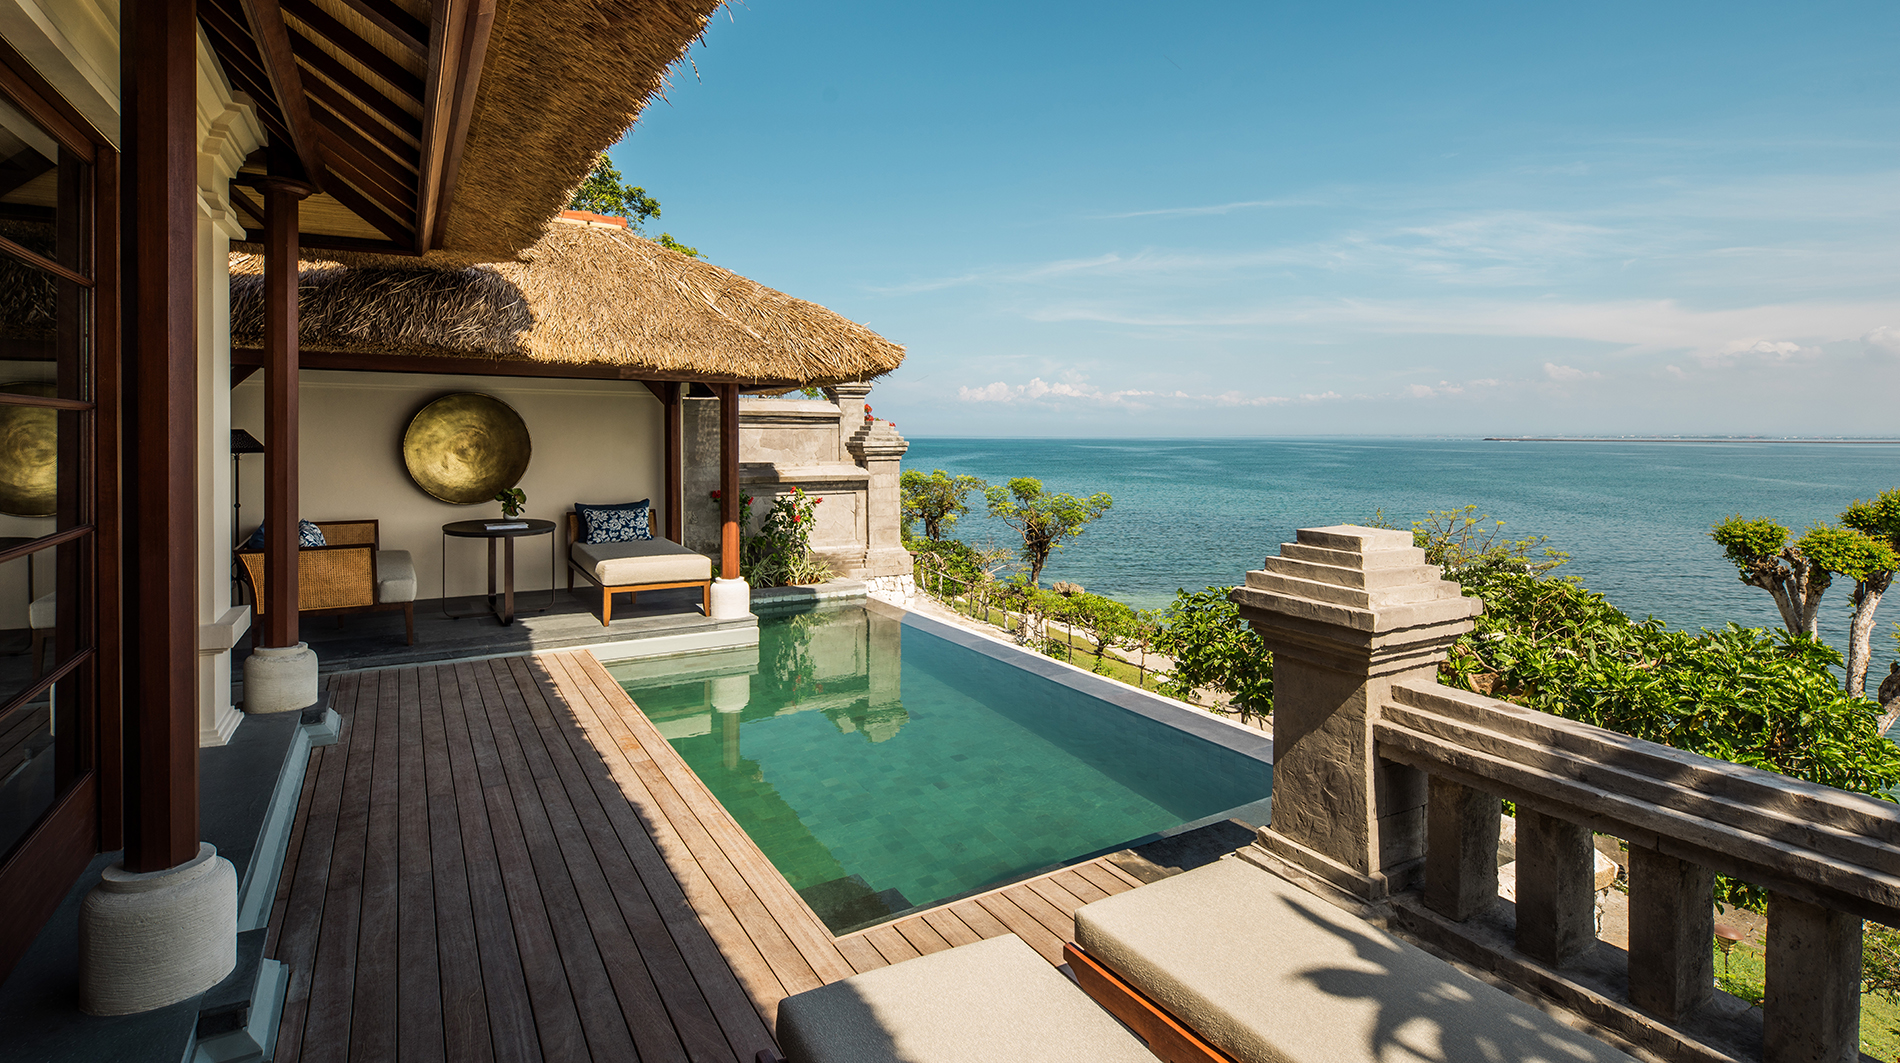 Four Seasons Resort Bali at Jimbaran Bay - Bali Hotels - Bali